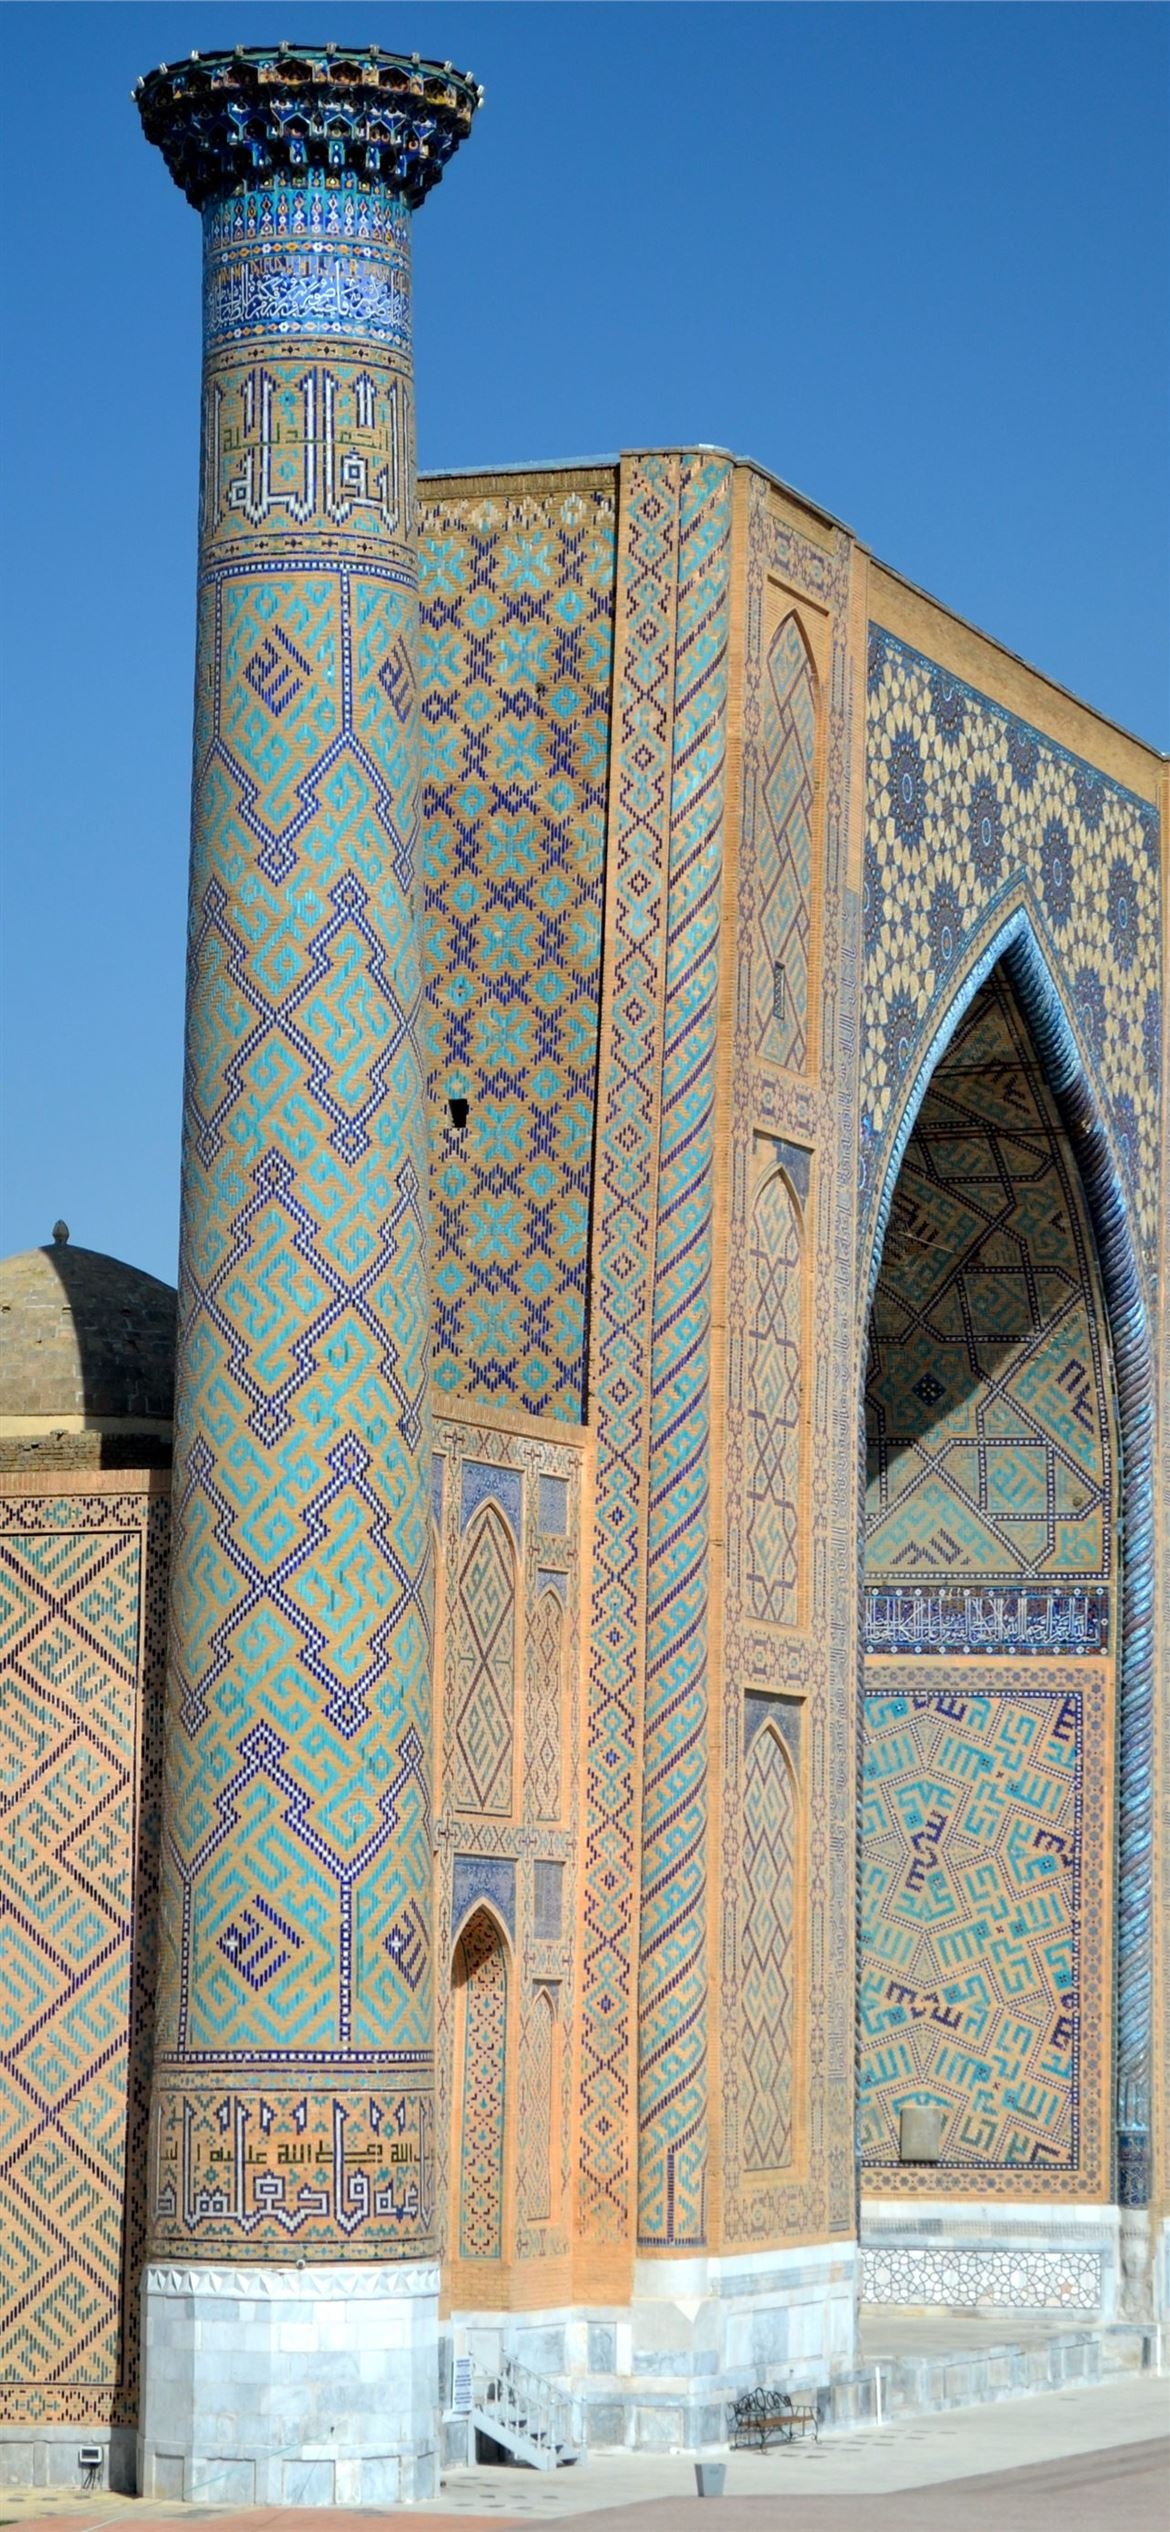 Uzbekistan iPhone wallpapers, Free download, Travel vibes, Captivating visuals, 1170x2540 HD Handy